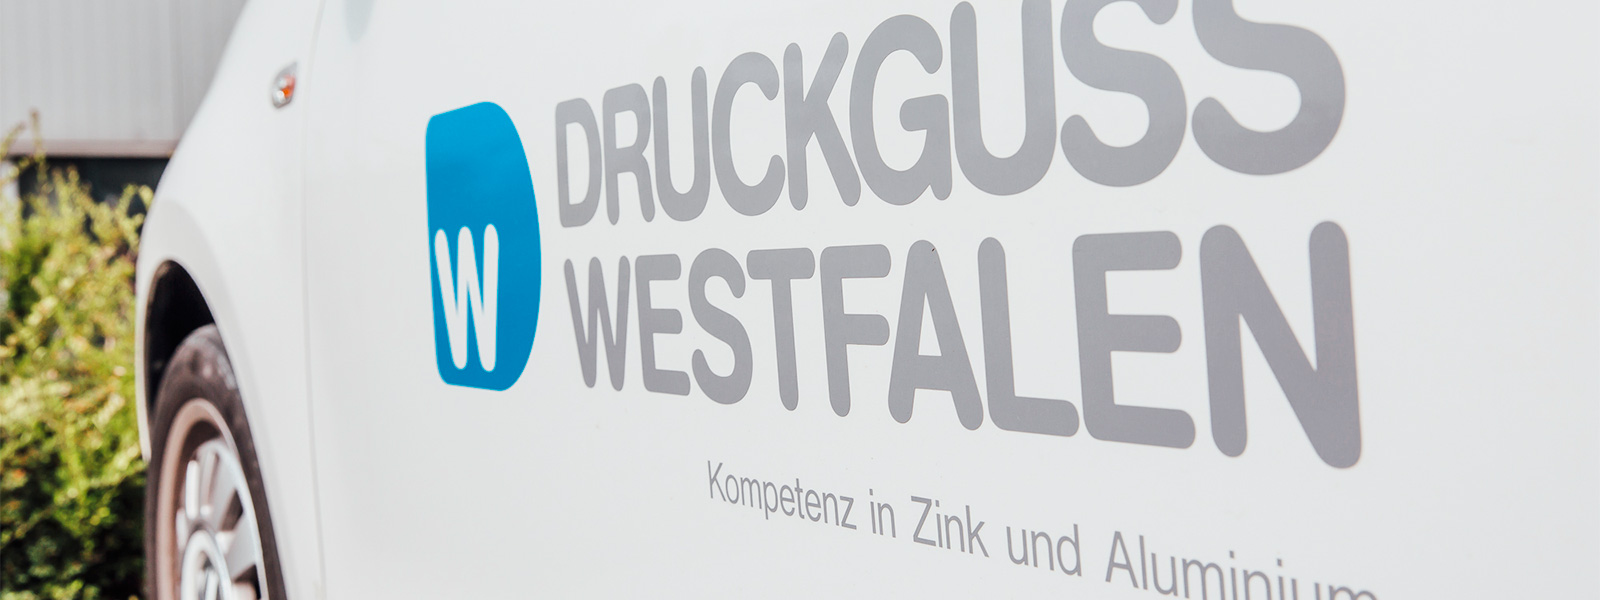 Druckguss Westfalen – Kompetenz in Zink und Aluminium